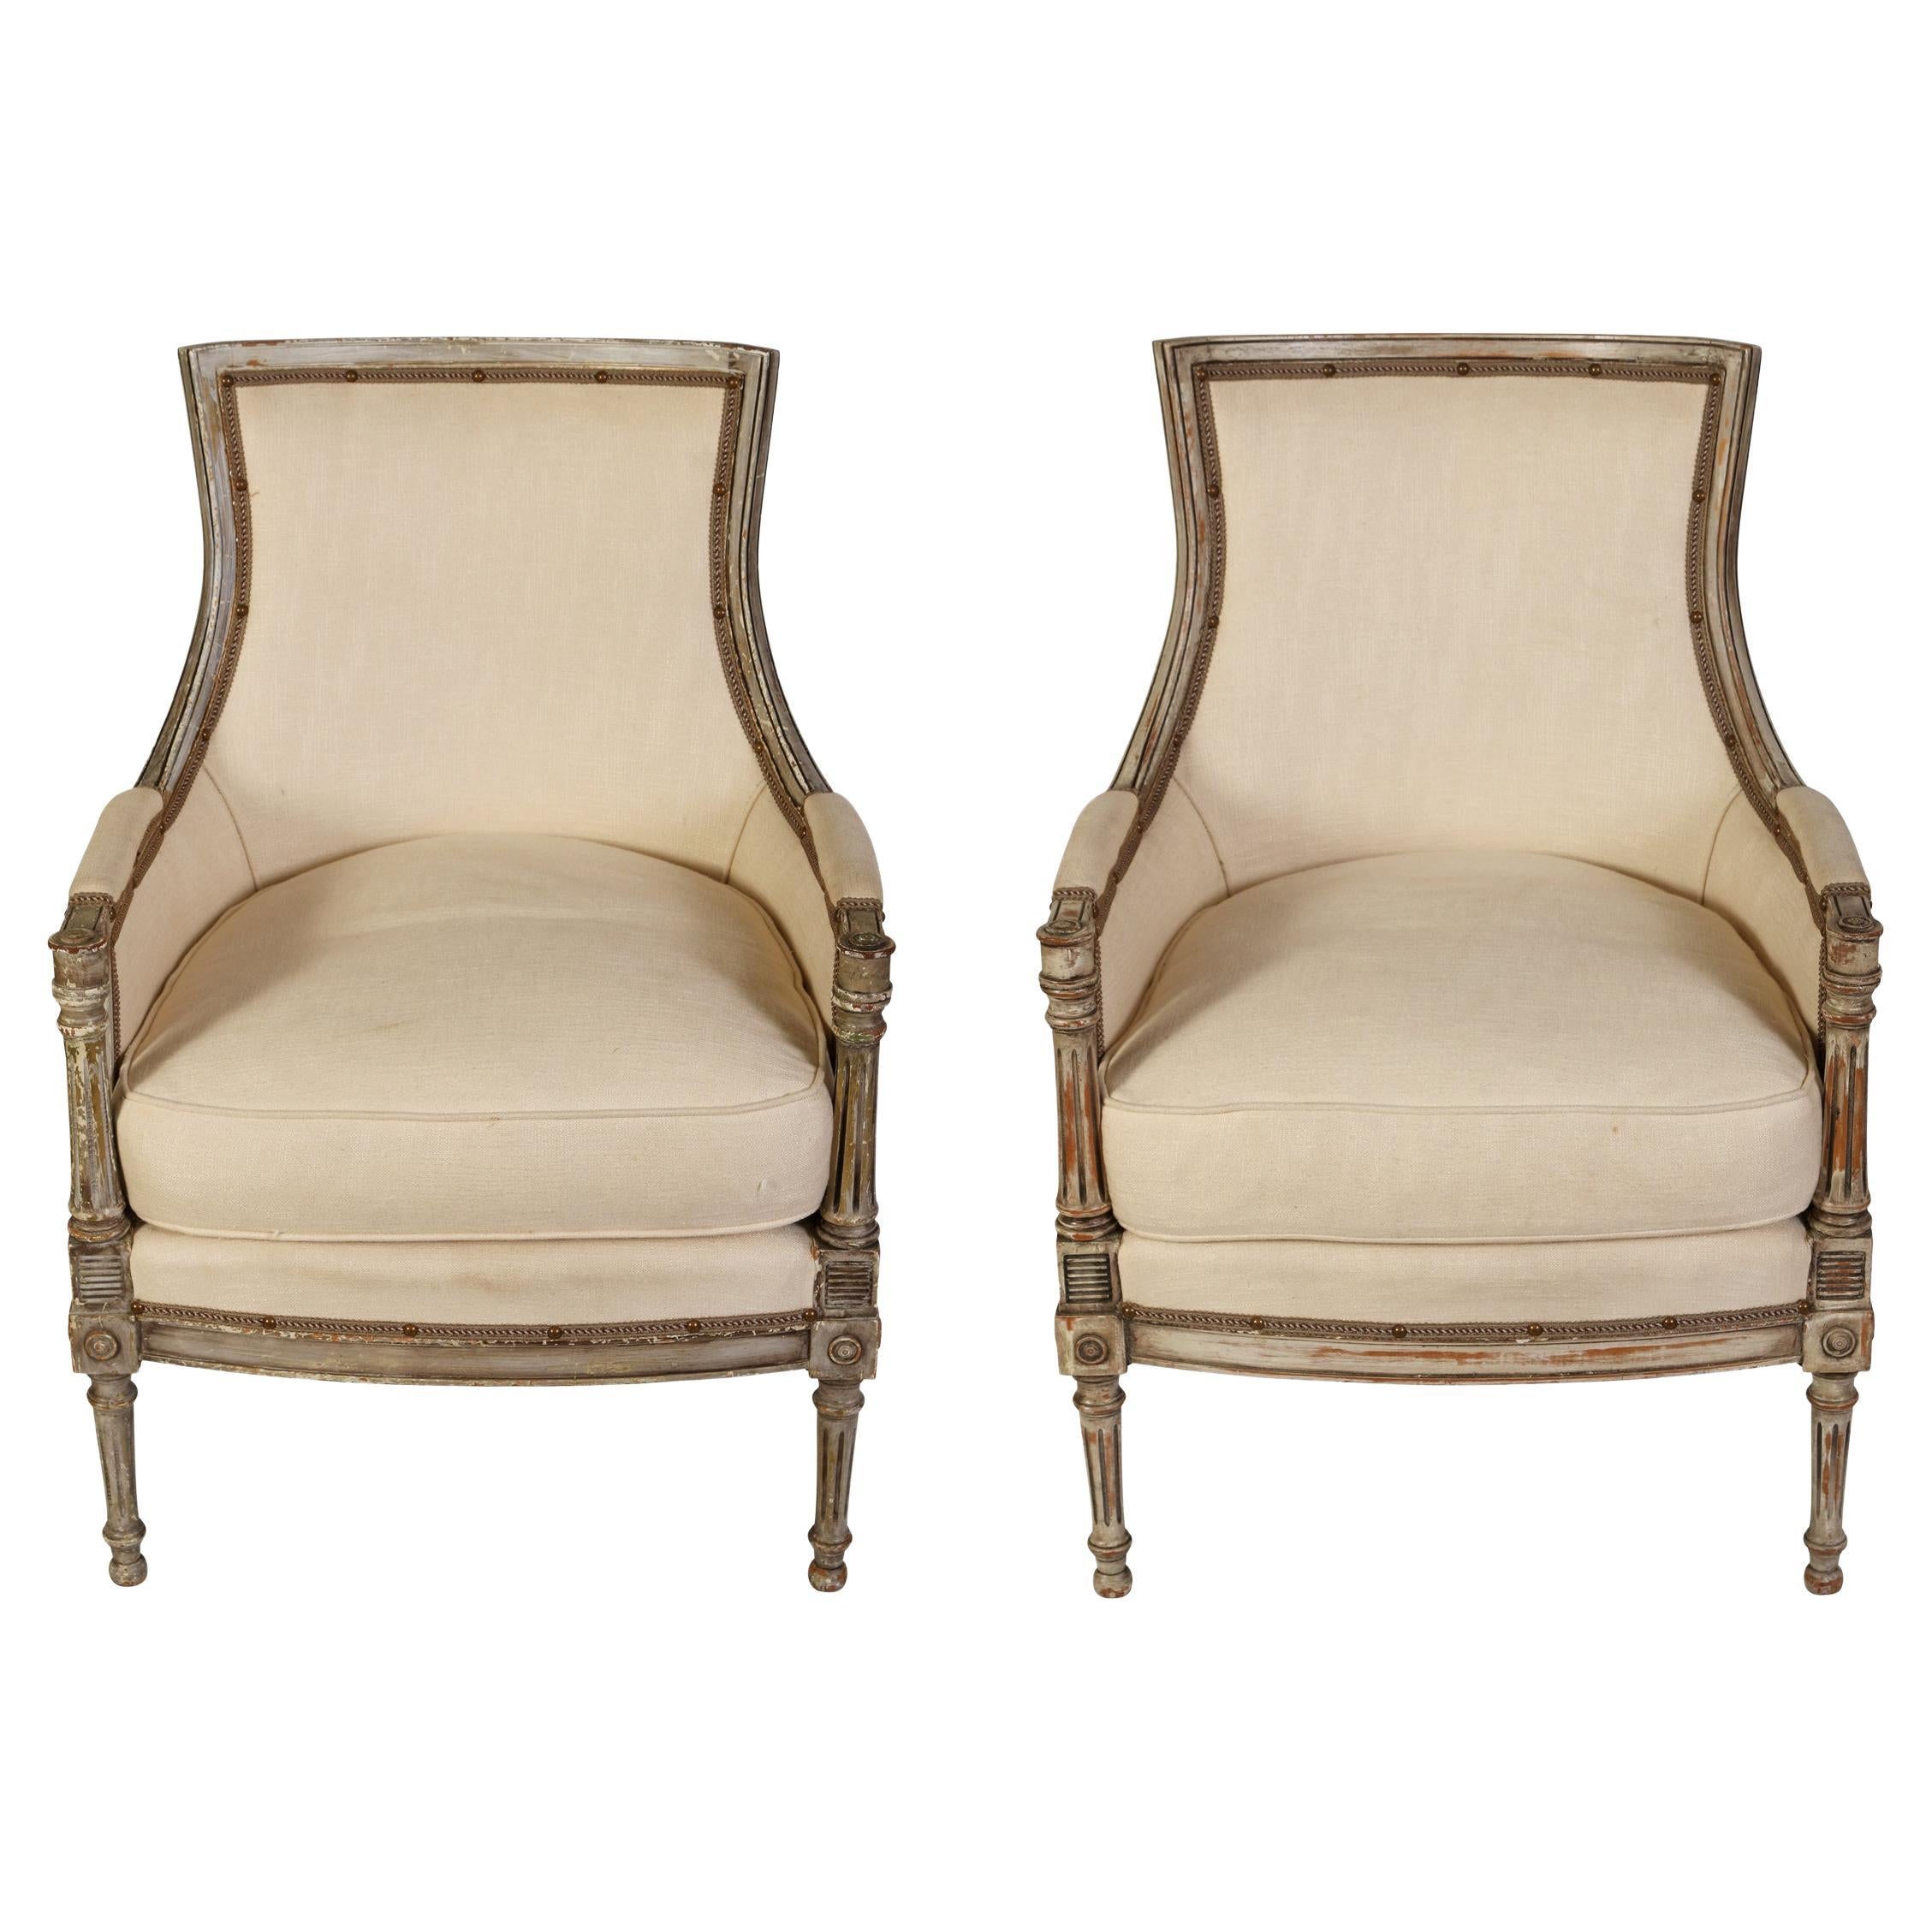 A Pair of Louis XVI Style Bergère Chairs